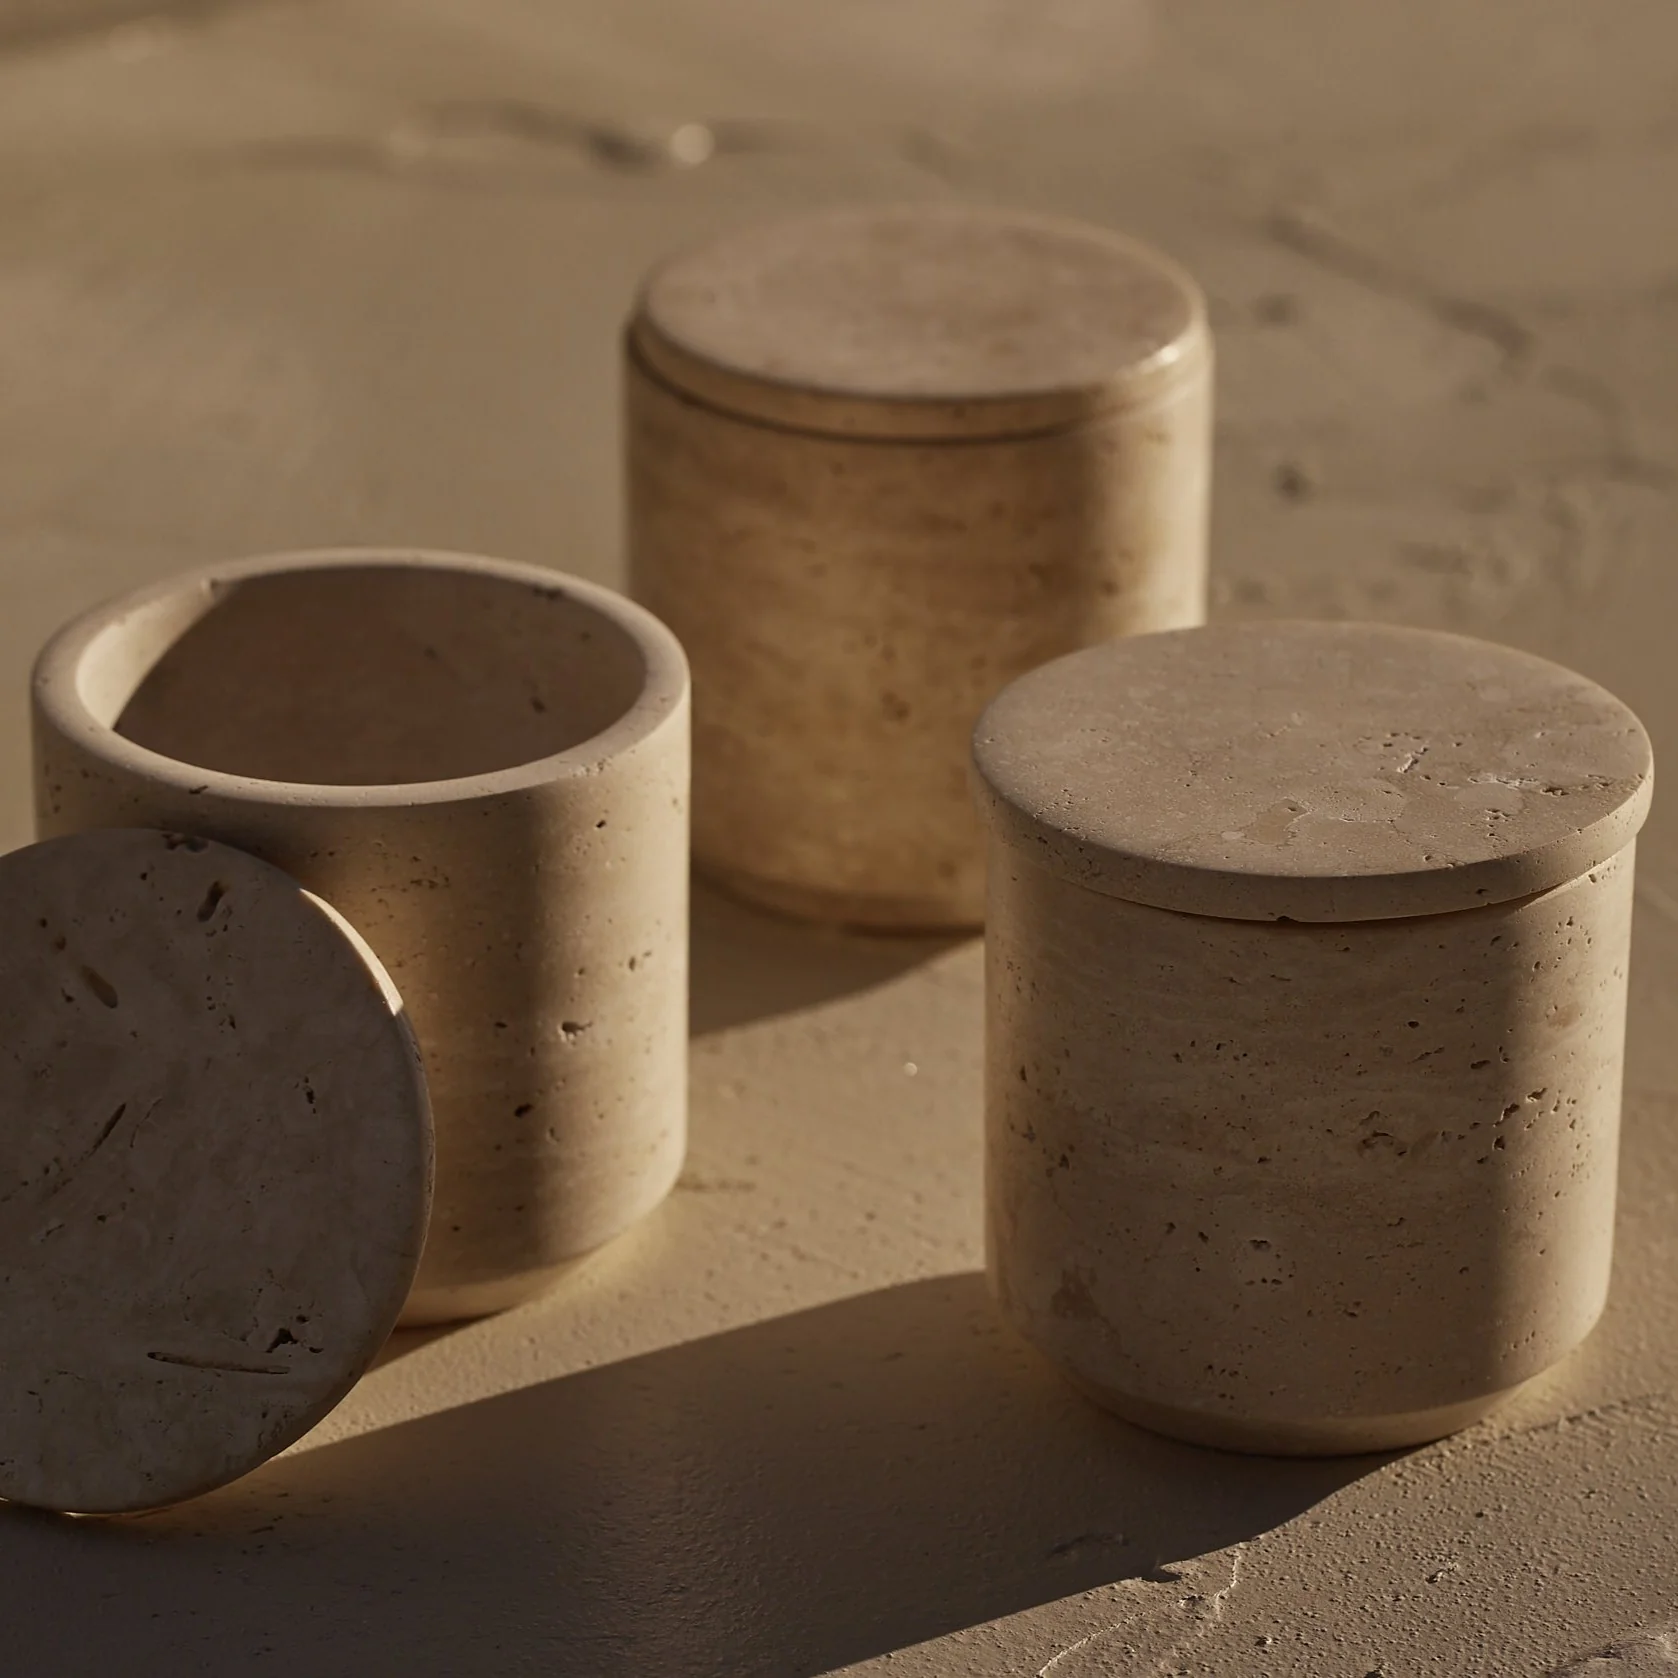 travertine-stone-jars-storage-natural-stone-containers-rustic-stone-jars-handcrafted-travertine-jars-kitchen-storage-decorative-canisters-organizers